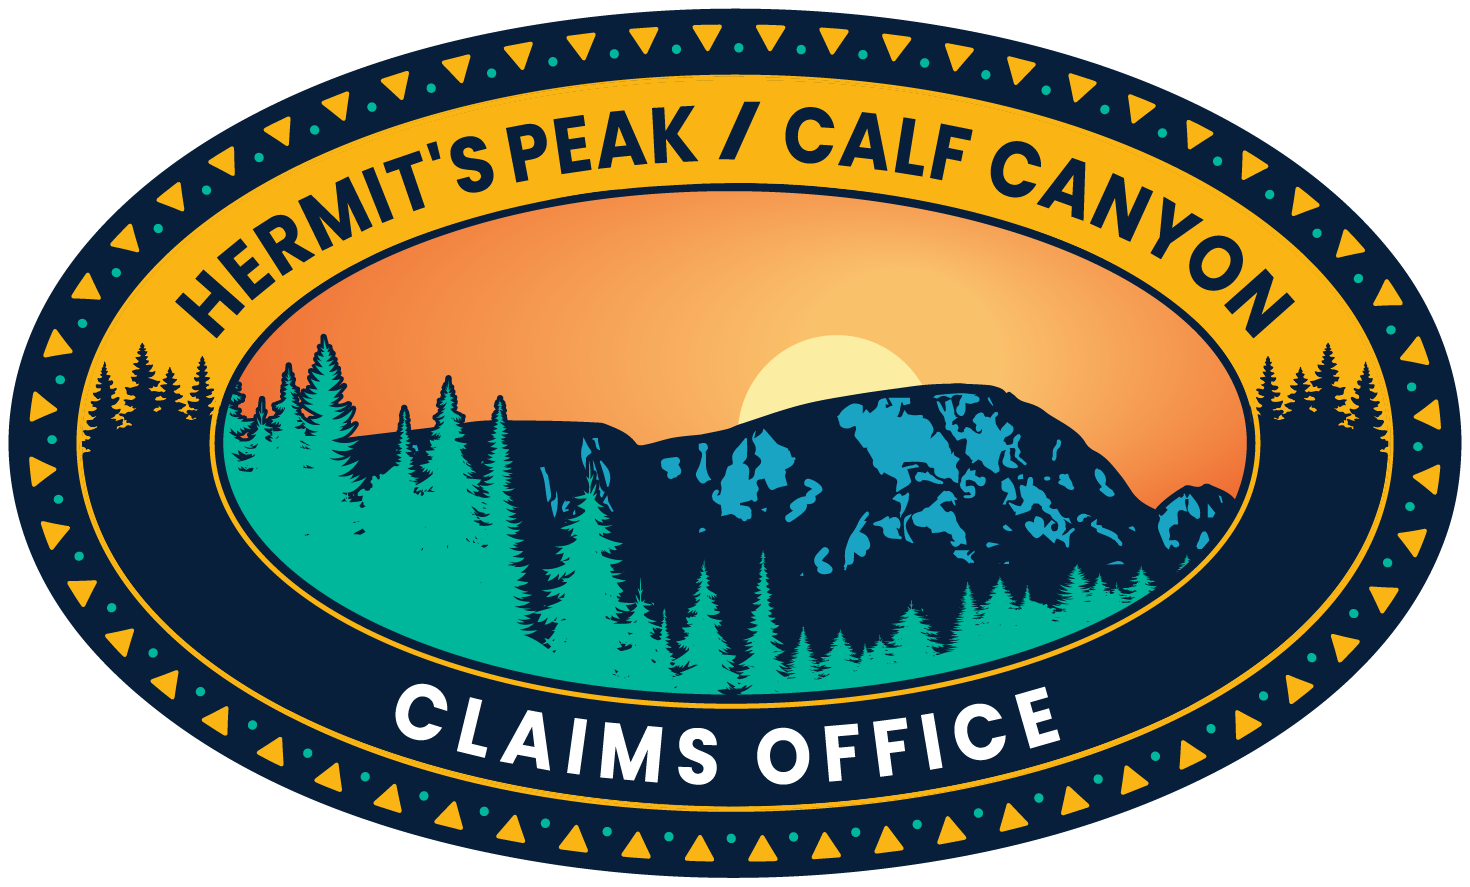 Hermit's Peak/Calf Canyon Claims Office Logo